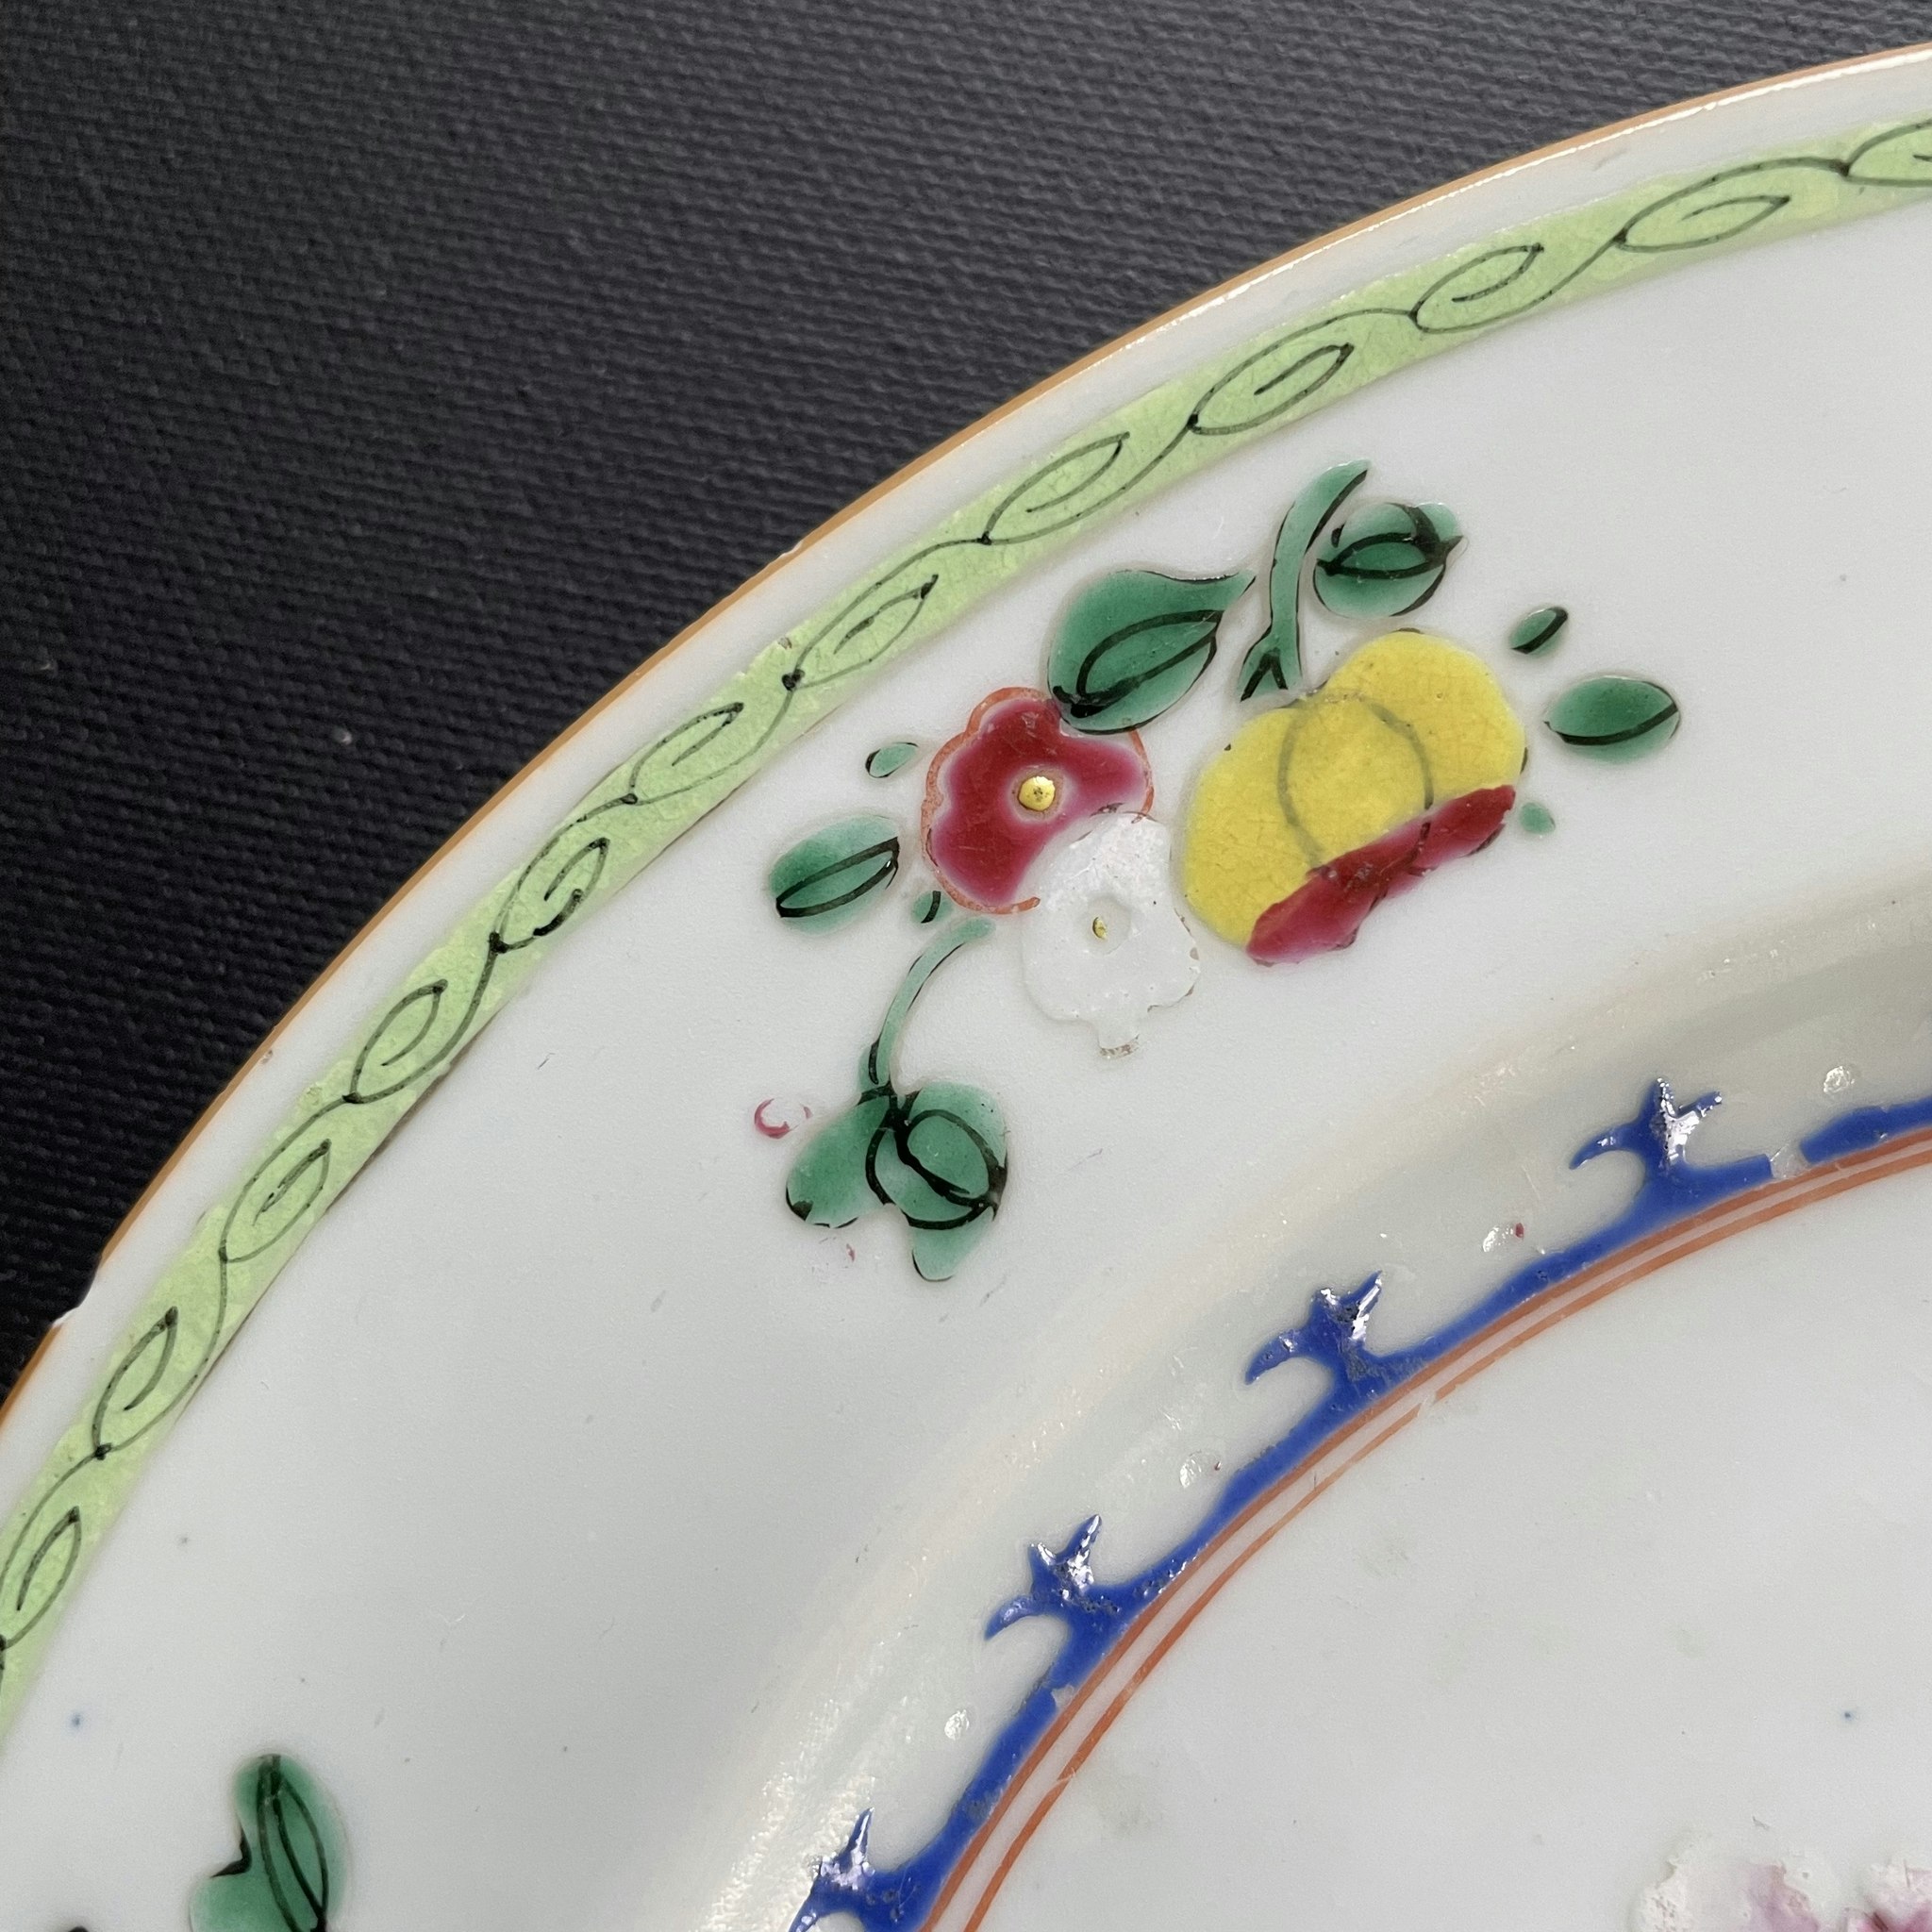 Chinese Antique porcelain plate first half of 18th C Yongzheng / Qianlong #1559